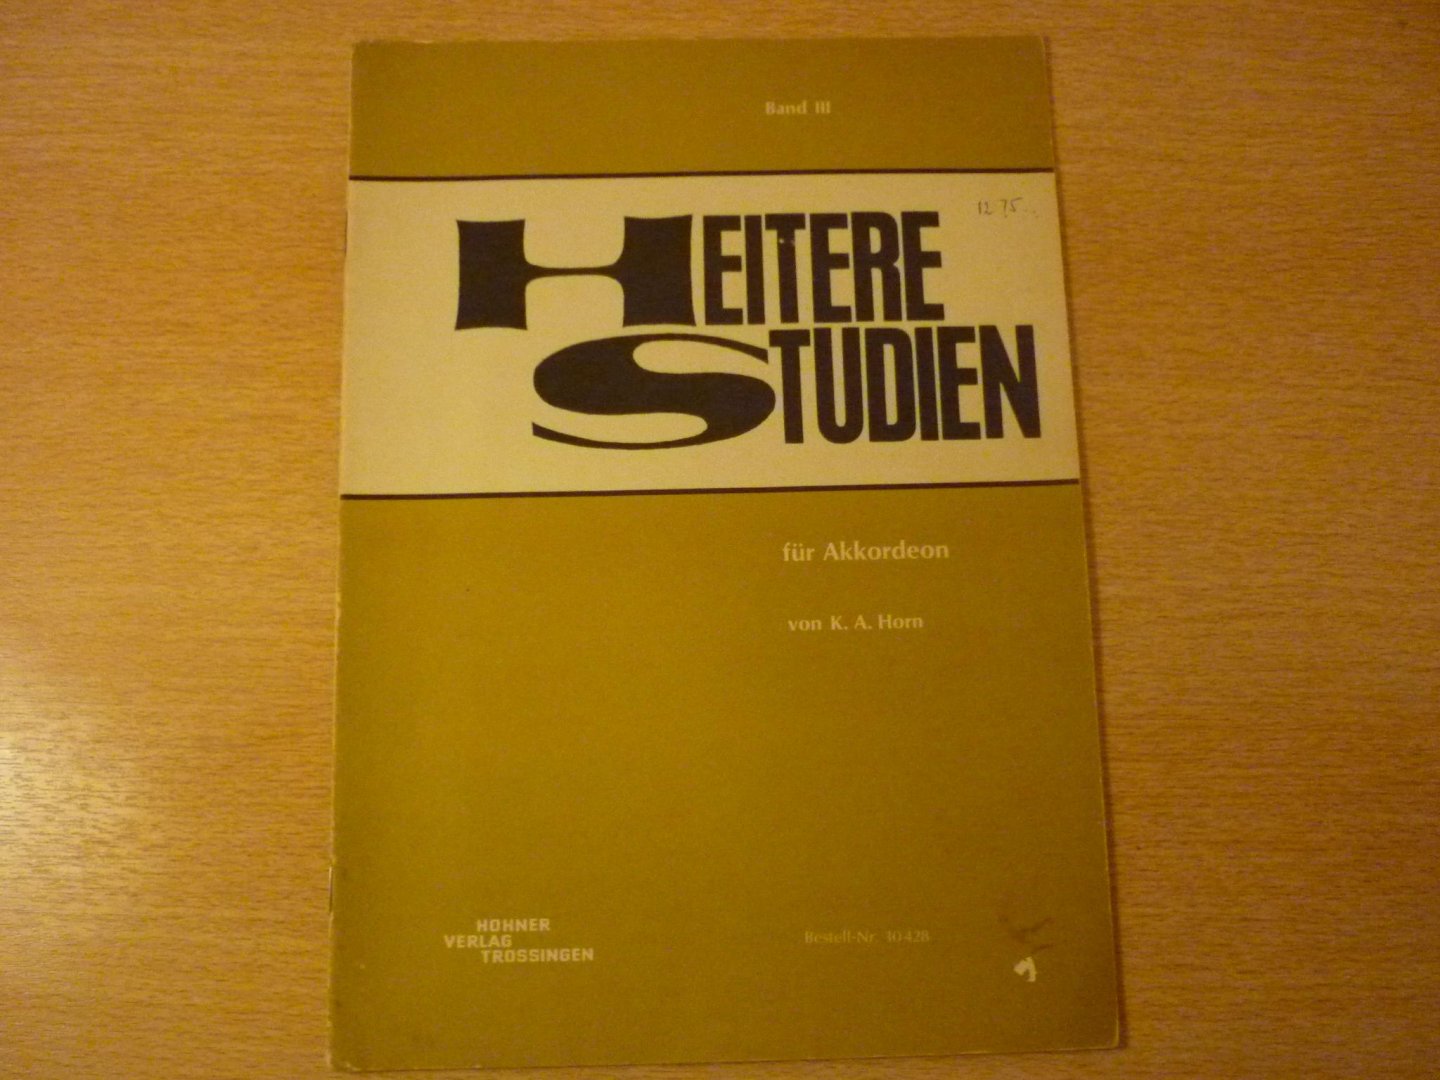 Horn; K.A. - Heitere Studien fur Akkordeon - Band III (7 melodische etuden)